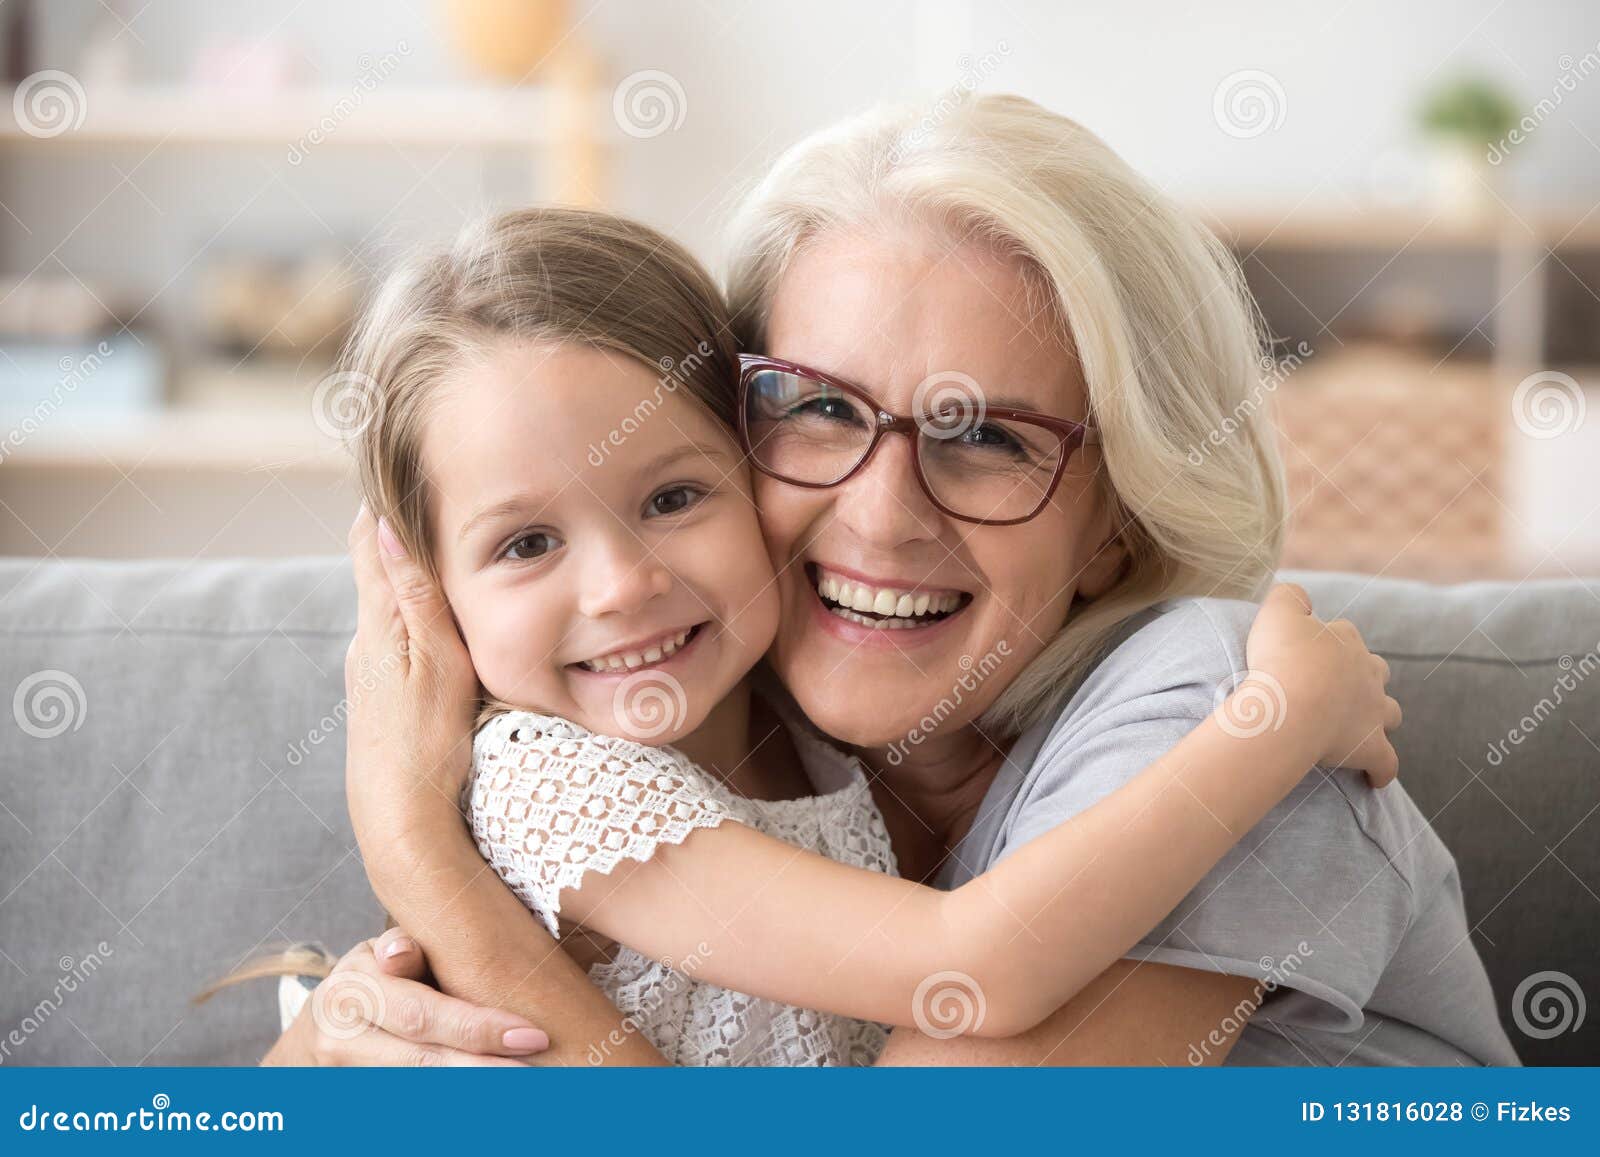 happy older grandmother hugging little grandchild girl looking a